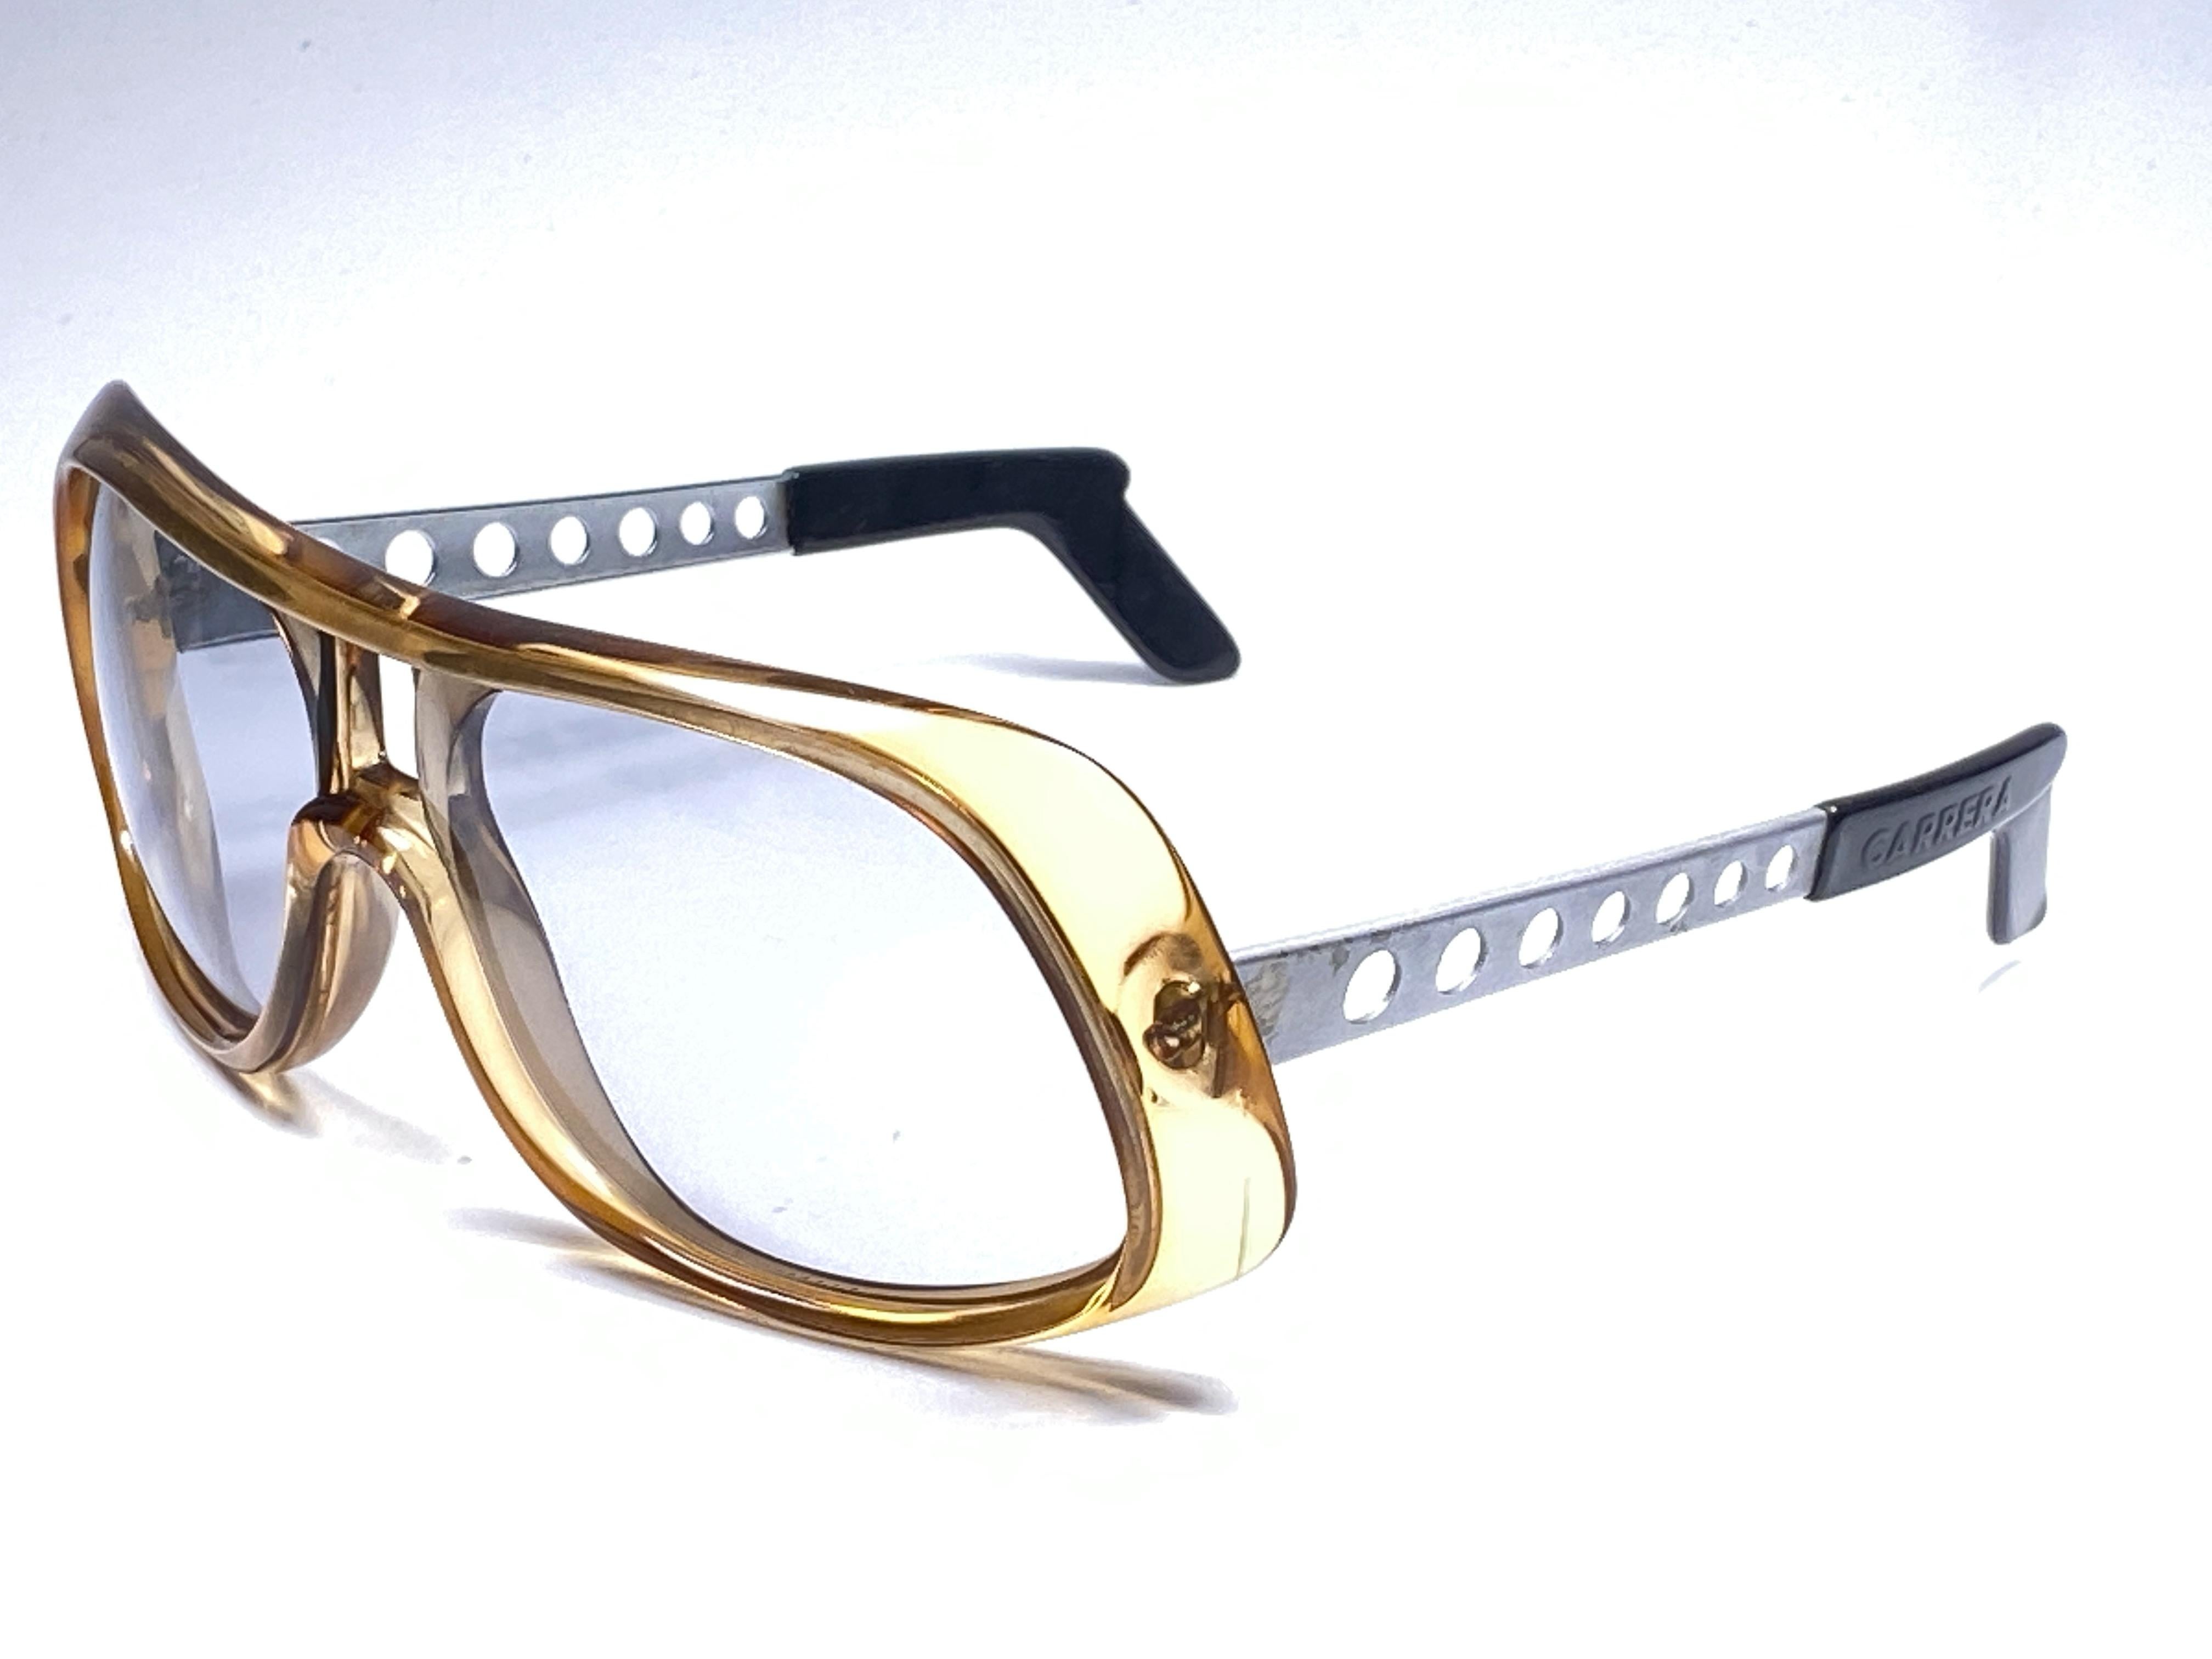 elvis glasses for sale